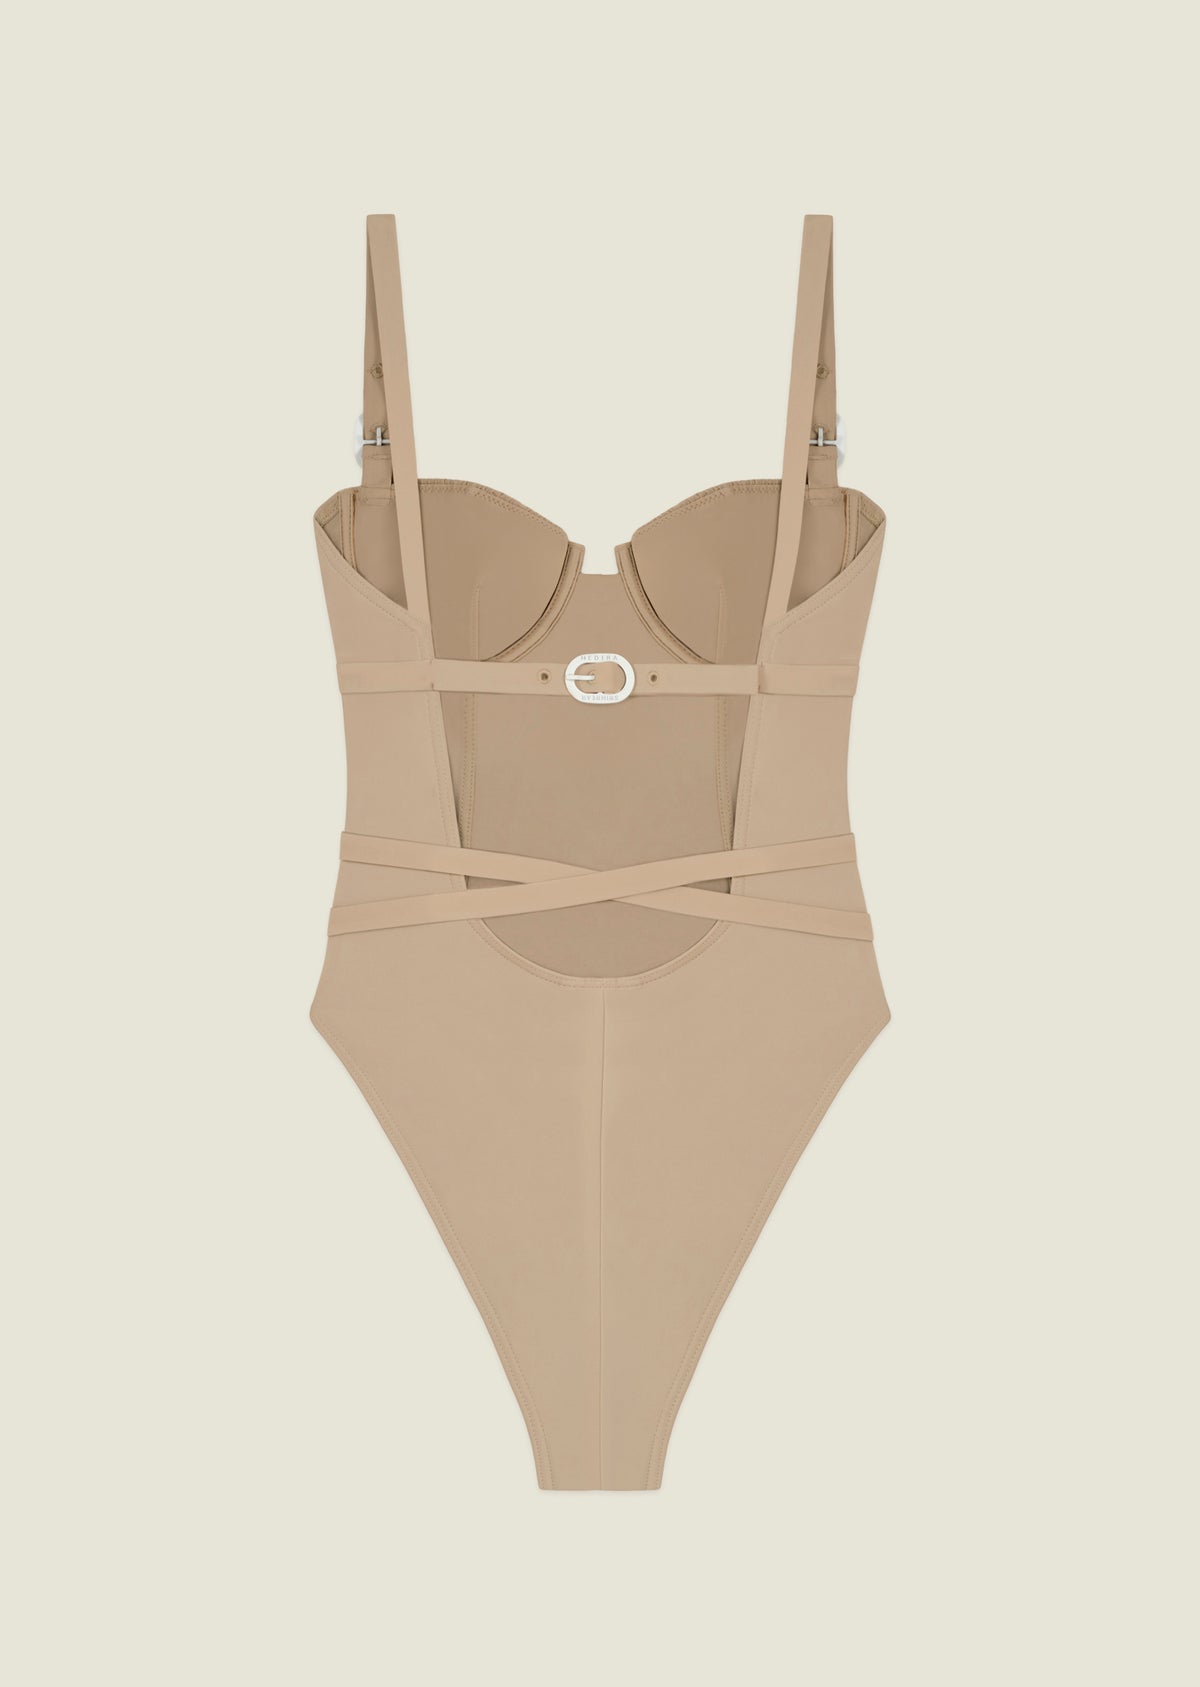 Anemona - Mosaico - One-piece Swimsuit - beige - nude - brown